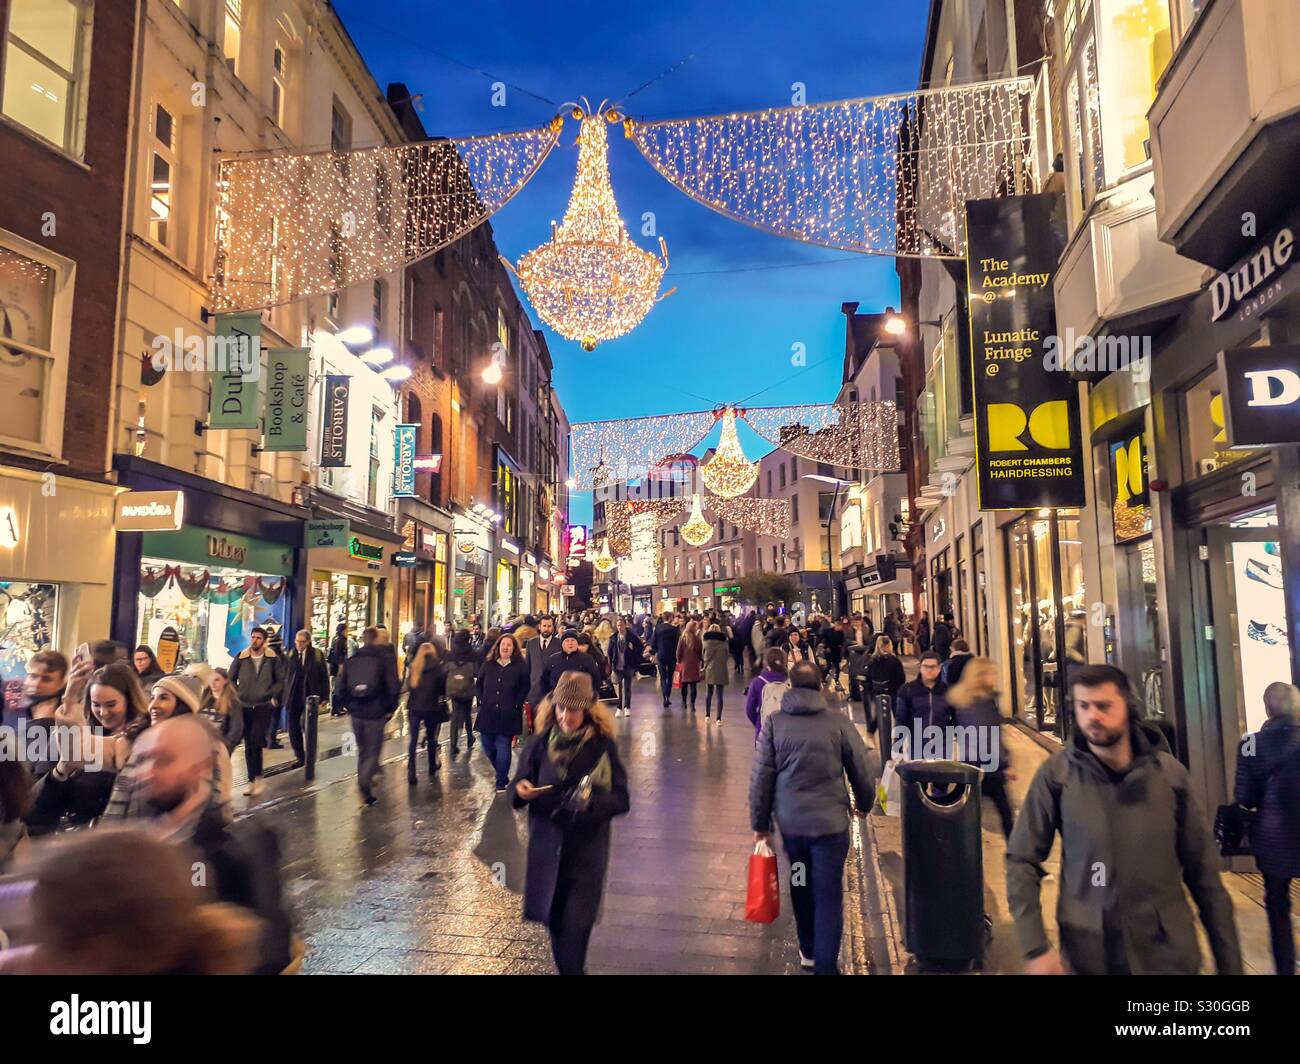 Grafton street (main Irish festive and shopping place) with Christmas illumination at nigh time. Dublin. Ireland. Stock Photo